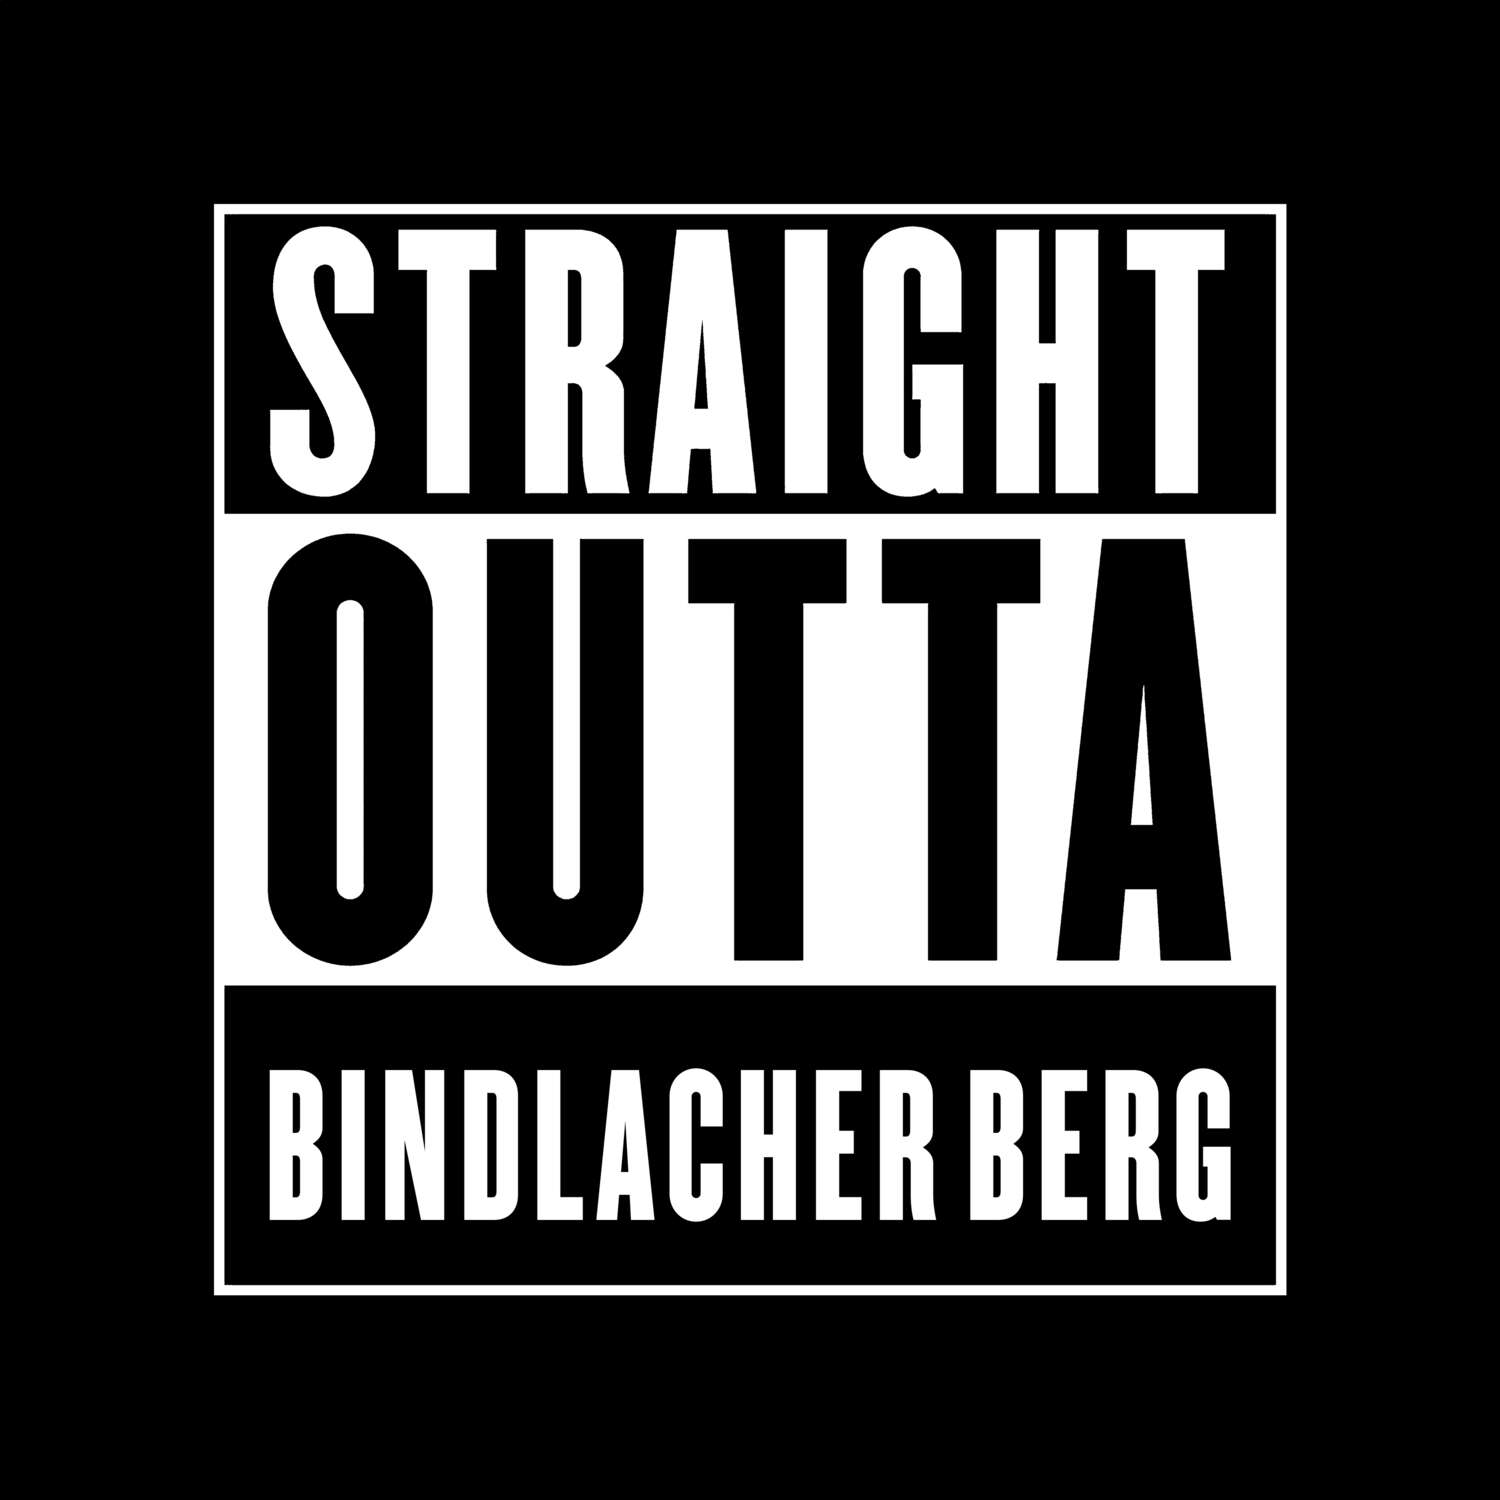 Bindlacher Berg T-Shirt »Straight Outta«